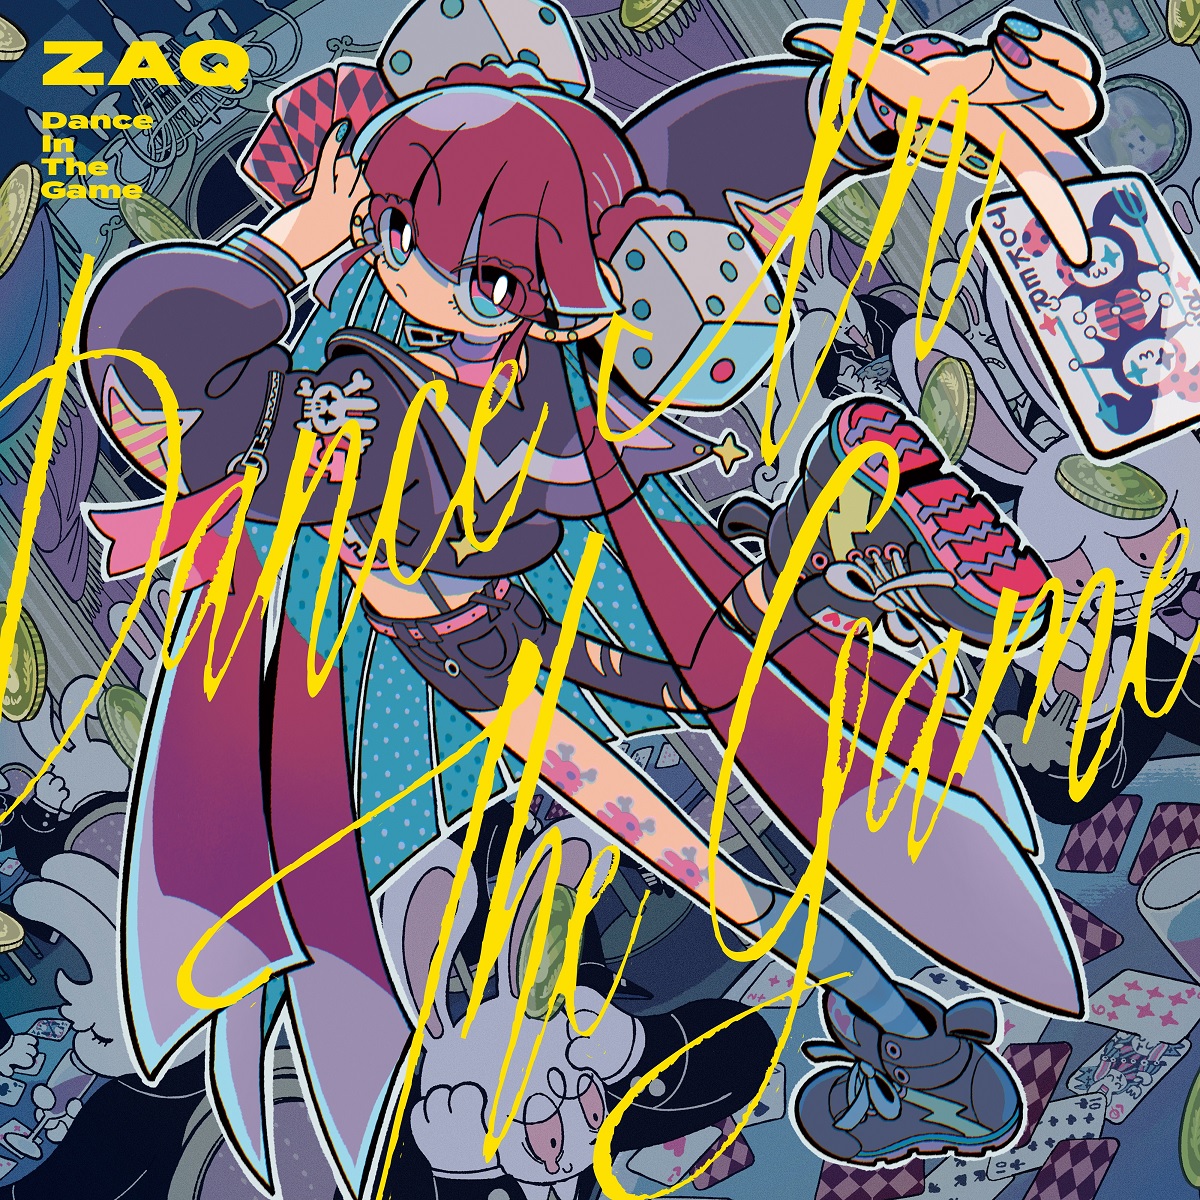 Cover art for『ZAQ - Live wo Wasureta Otaku ni Sasageru Oratorio feat. Maaya Uchida』from the release『Dance In The Game』